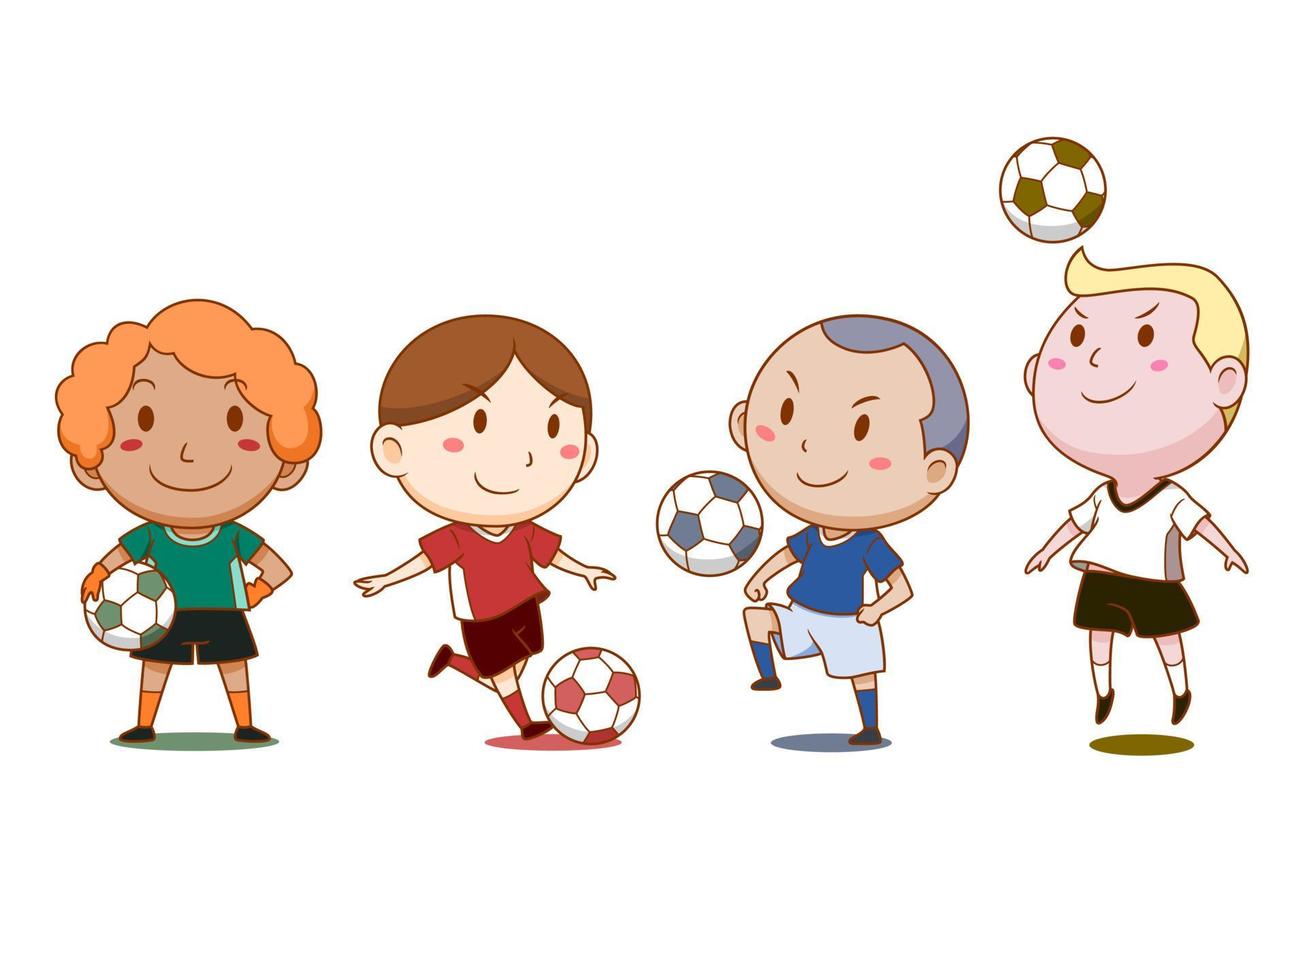 Cartoon illustration of cute soccer players. vector